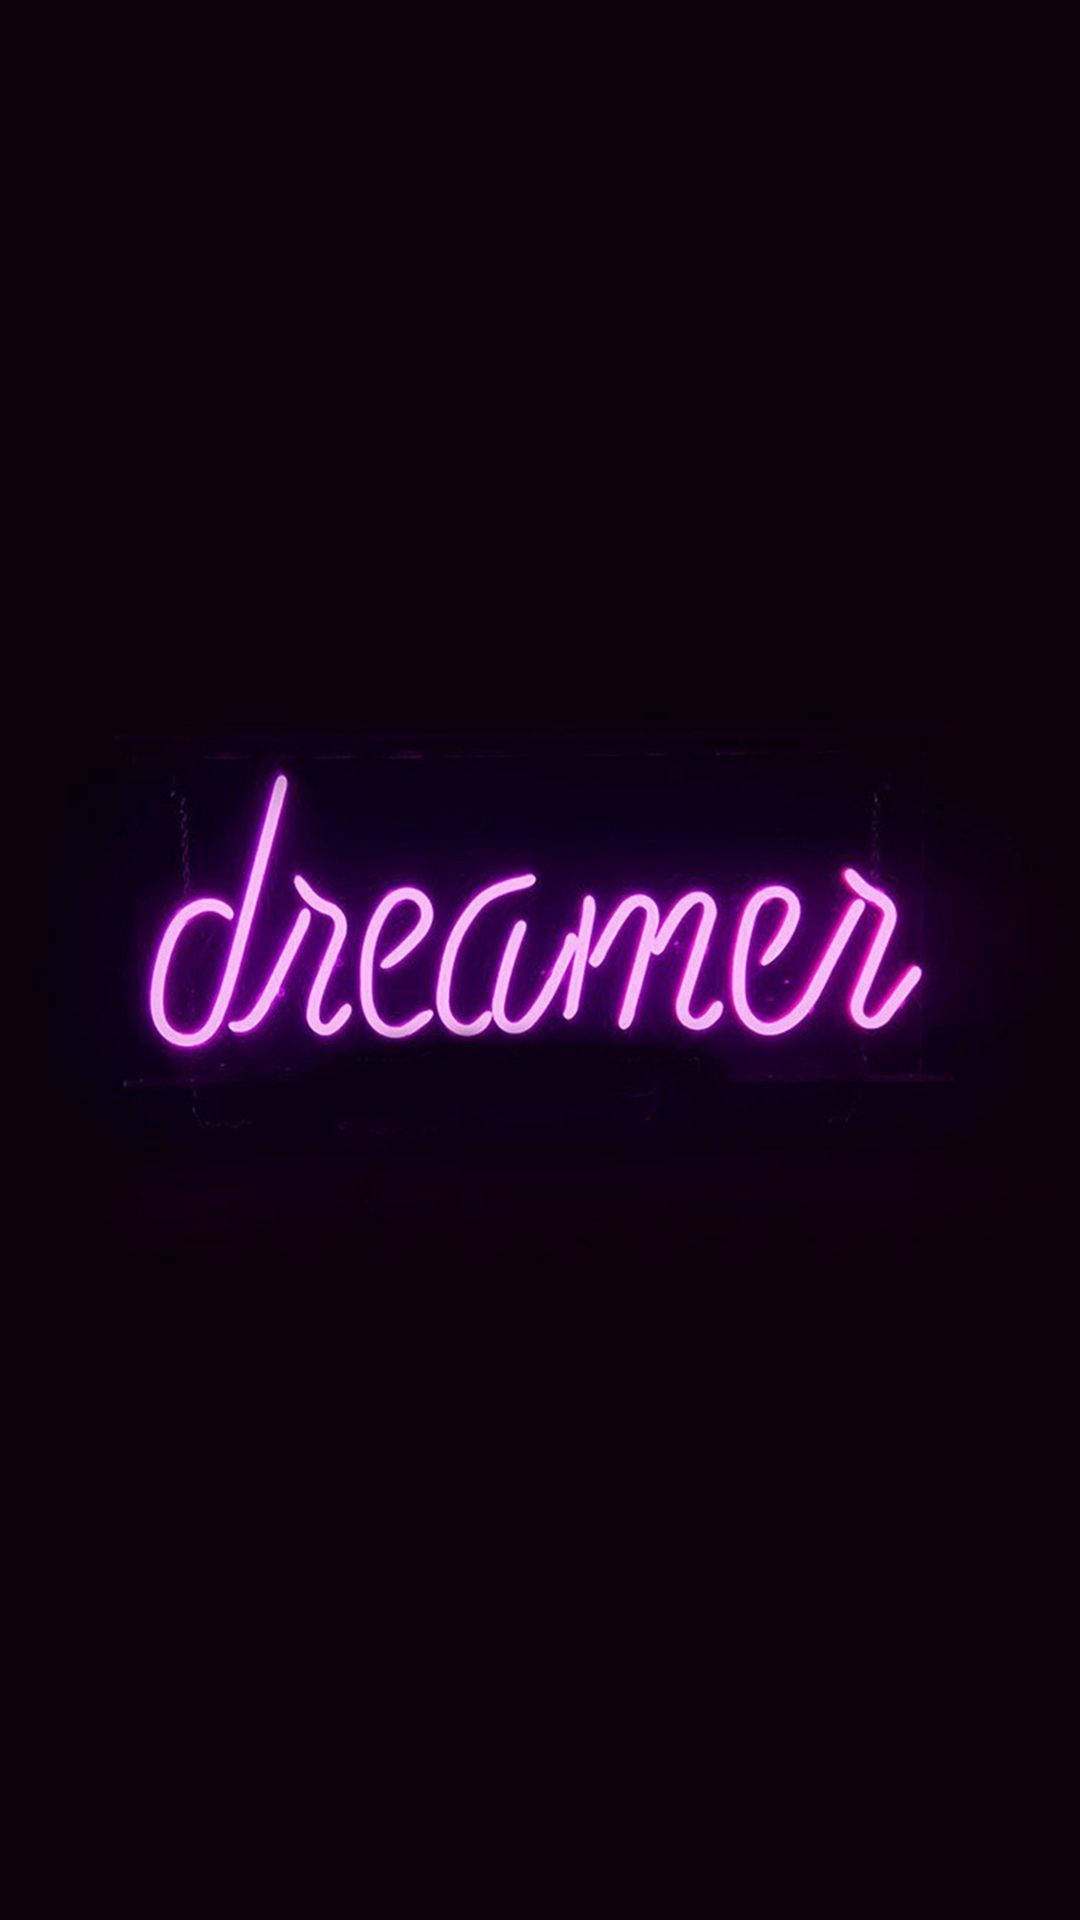 Dreamer Black And Purple Aesthetic